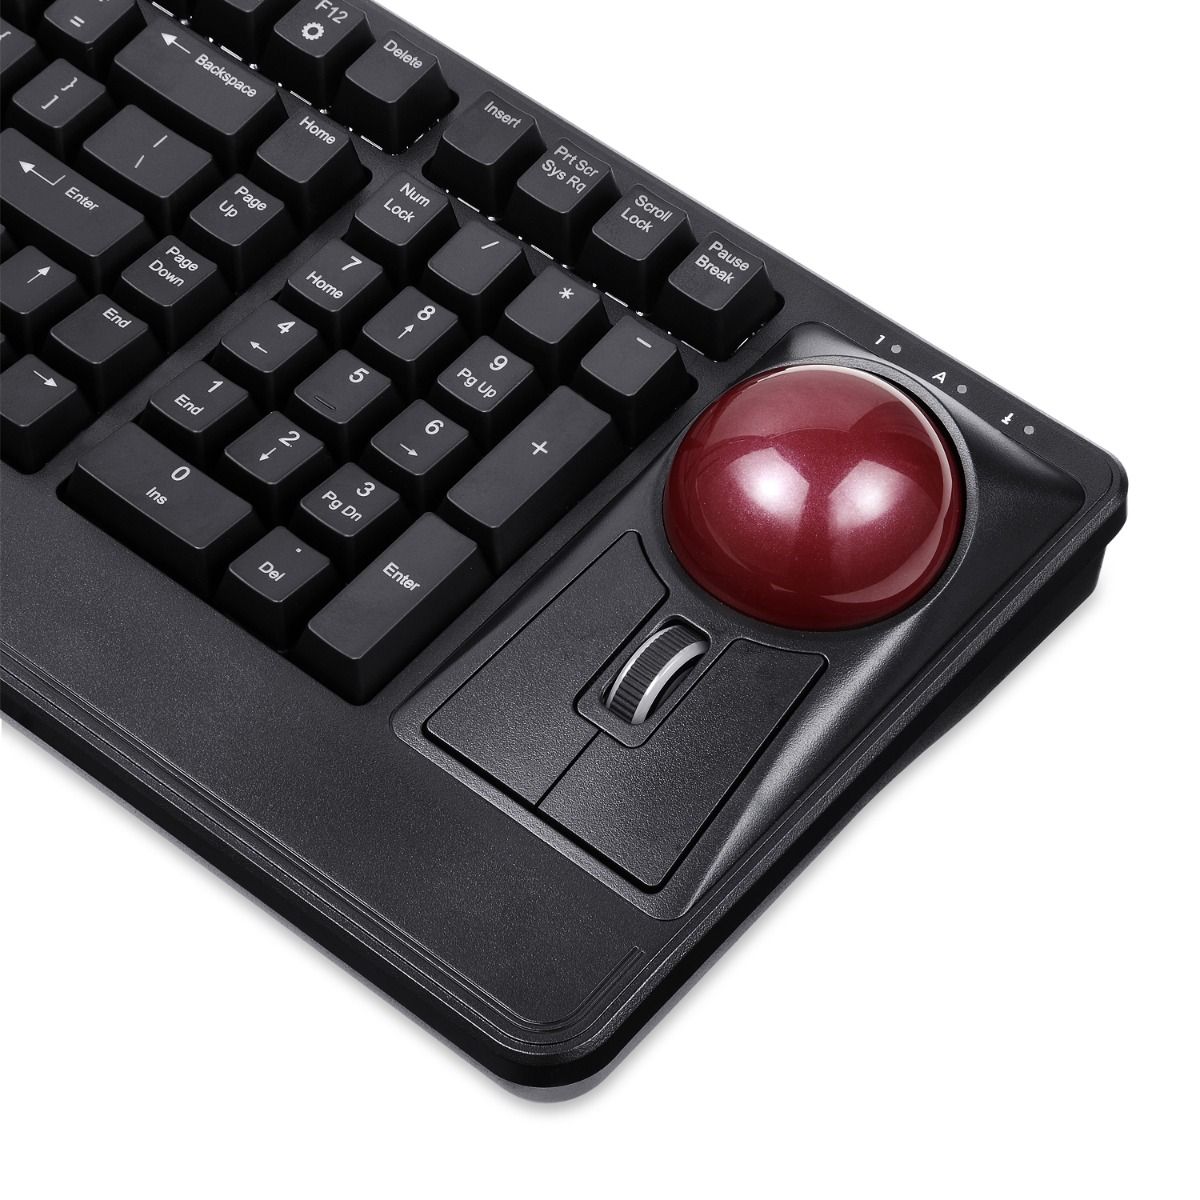 Keyboard with trackball